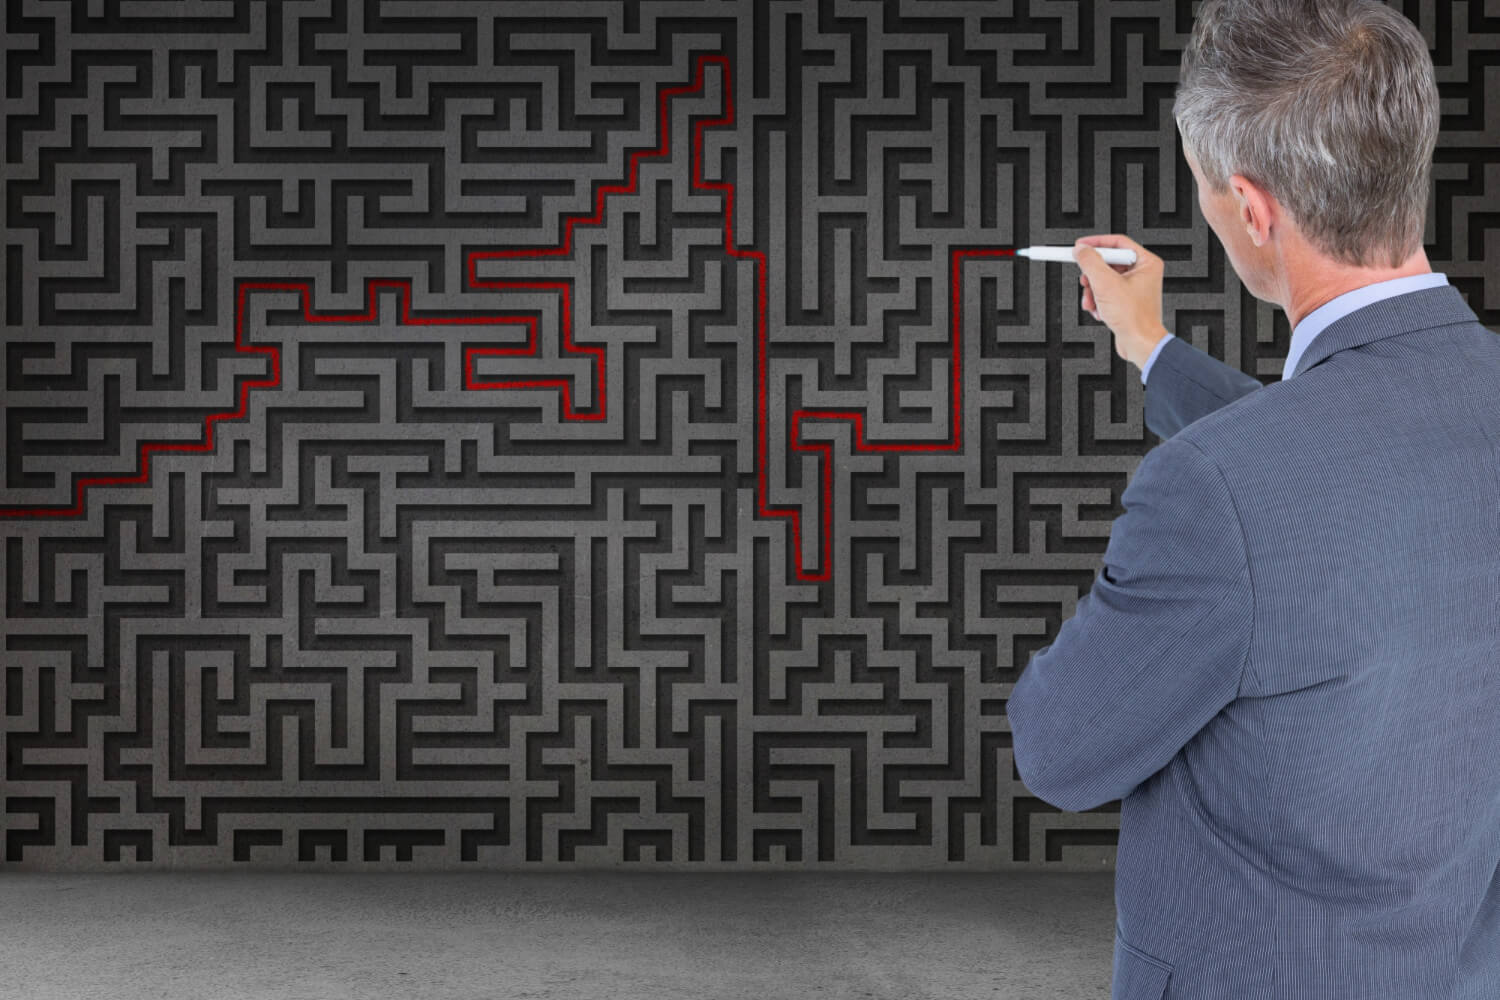 a-businessman-solving-maze-on-a-wall